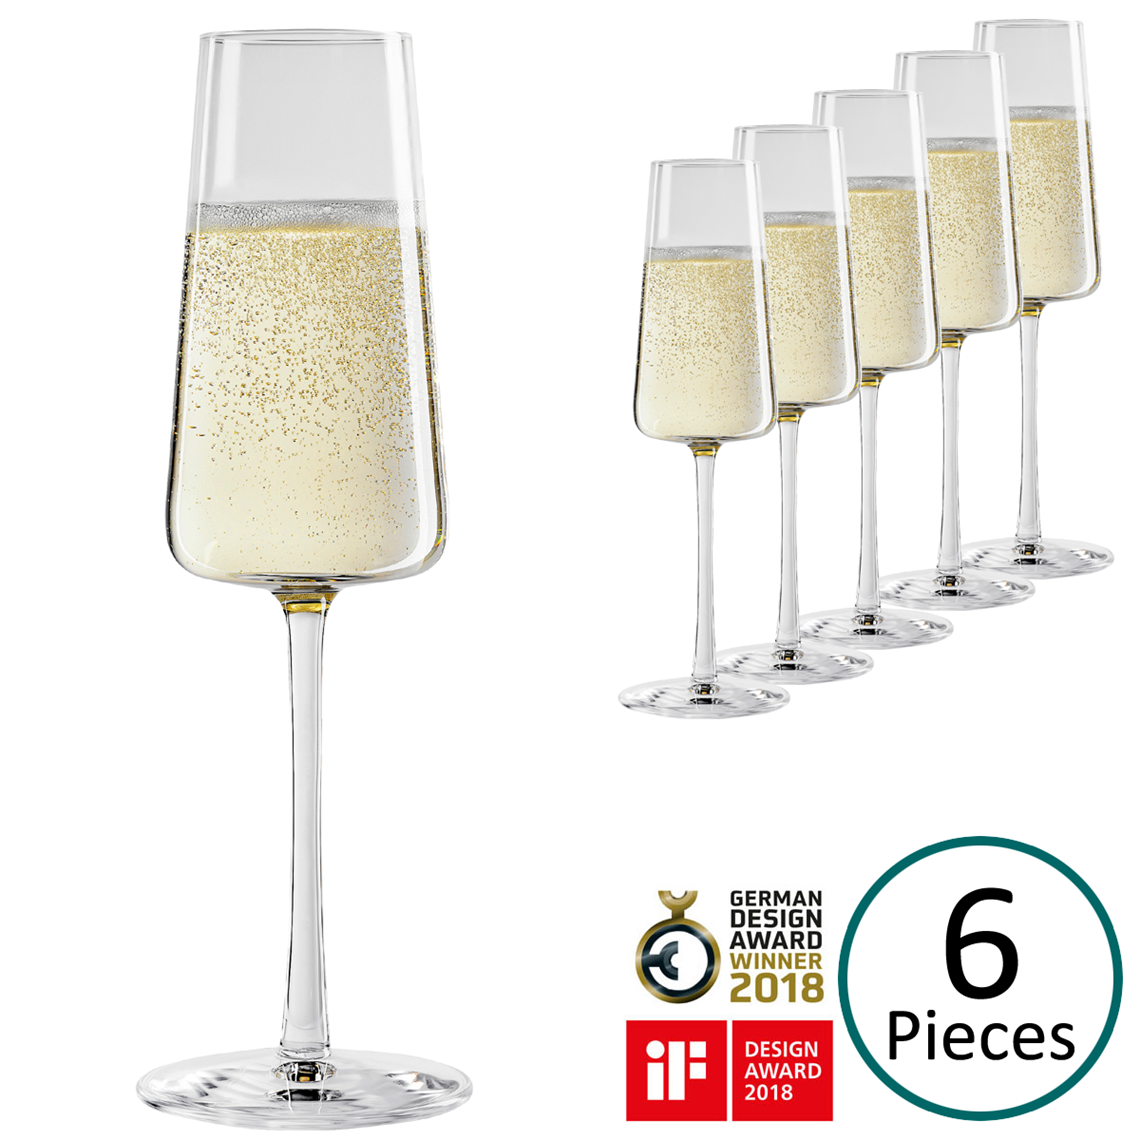 Stolzle Power Champagne Glasses / Flute - Set of 6